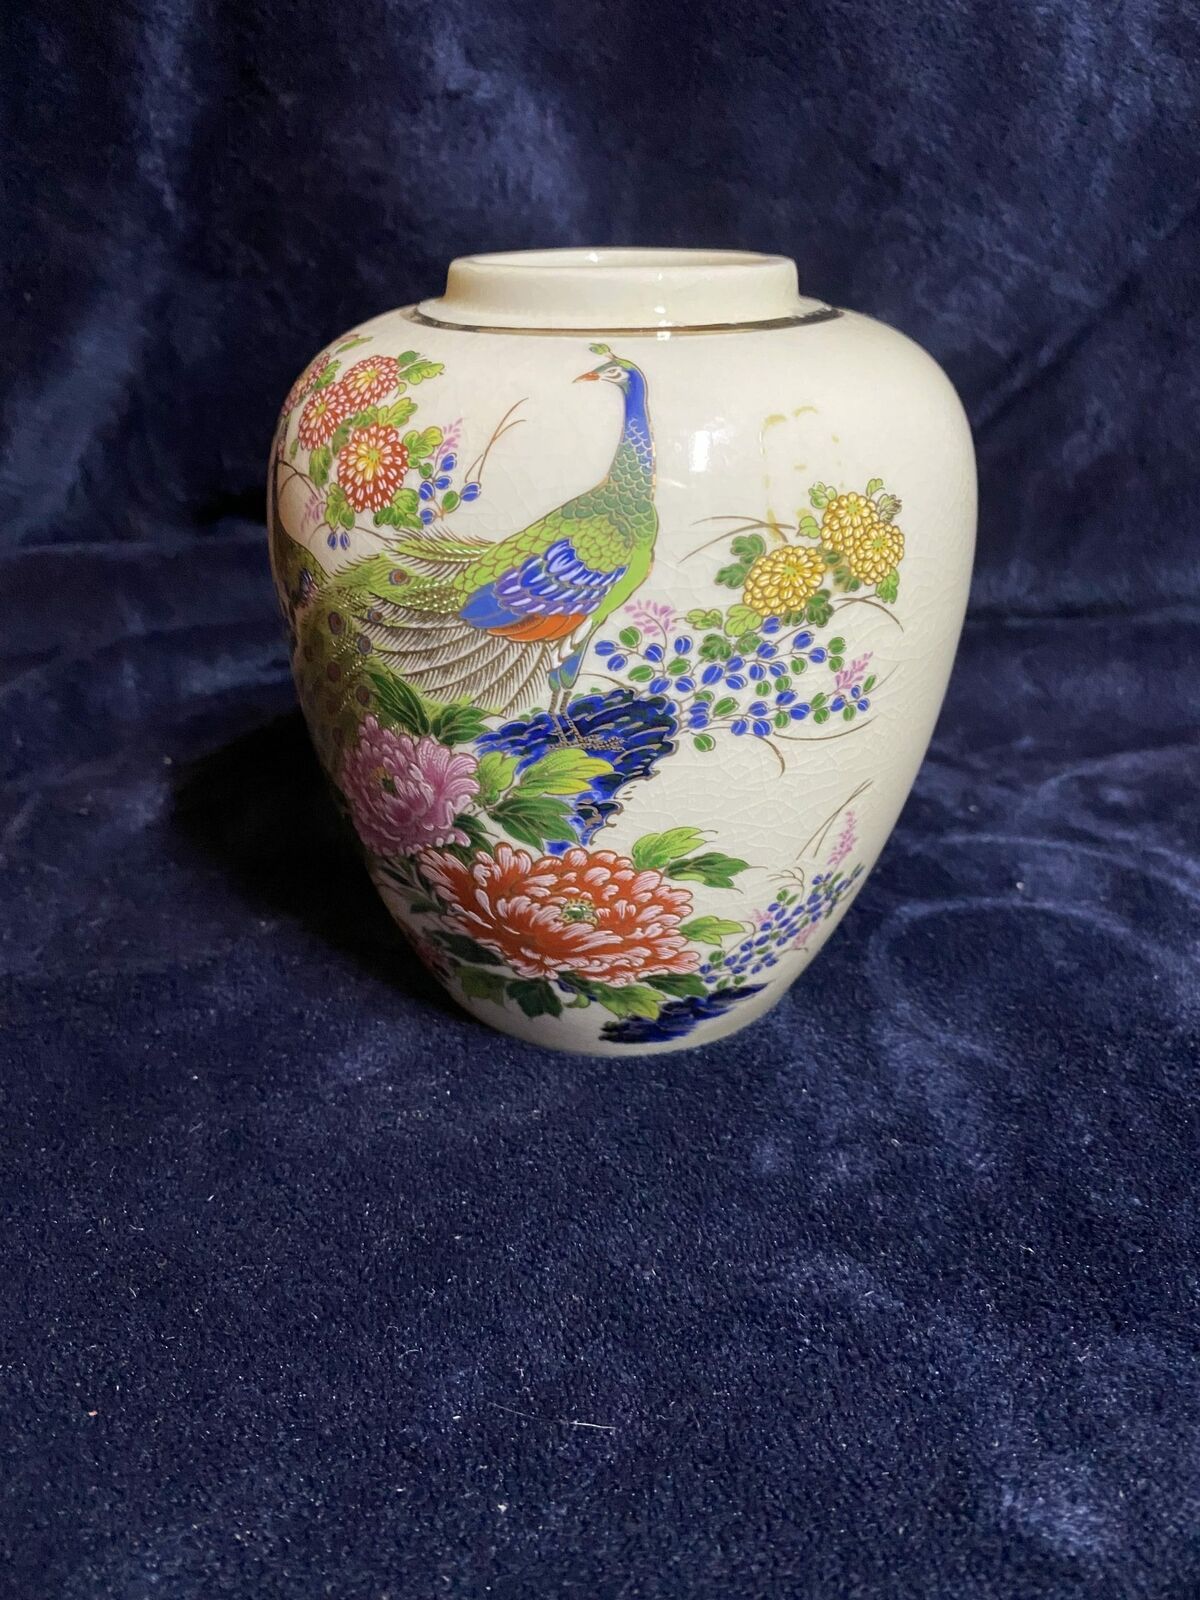 Primary image for Sato Gordon Japanese Porcelain Peacock Vase Ginger Jar without Lid Made in Japan